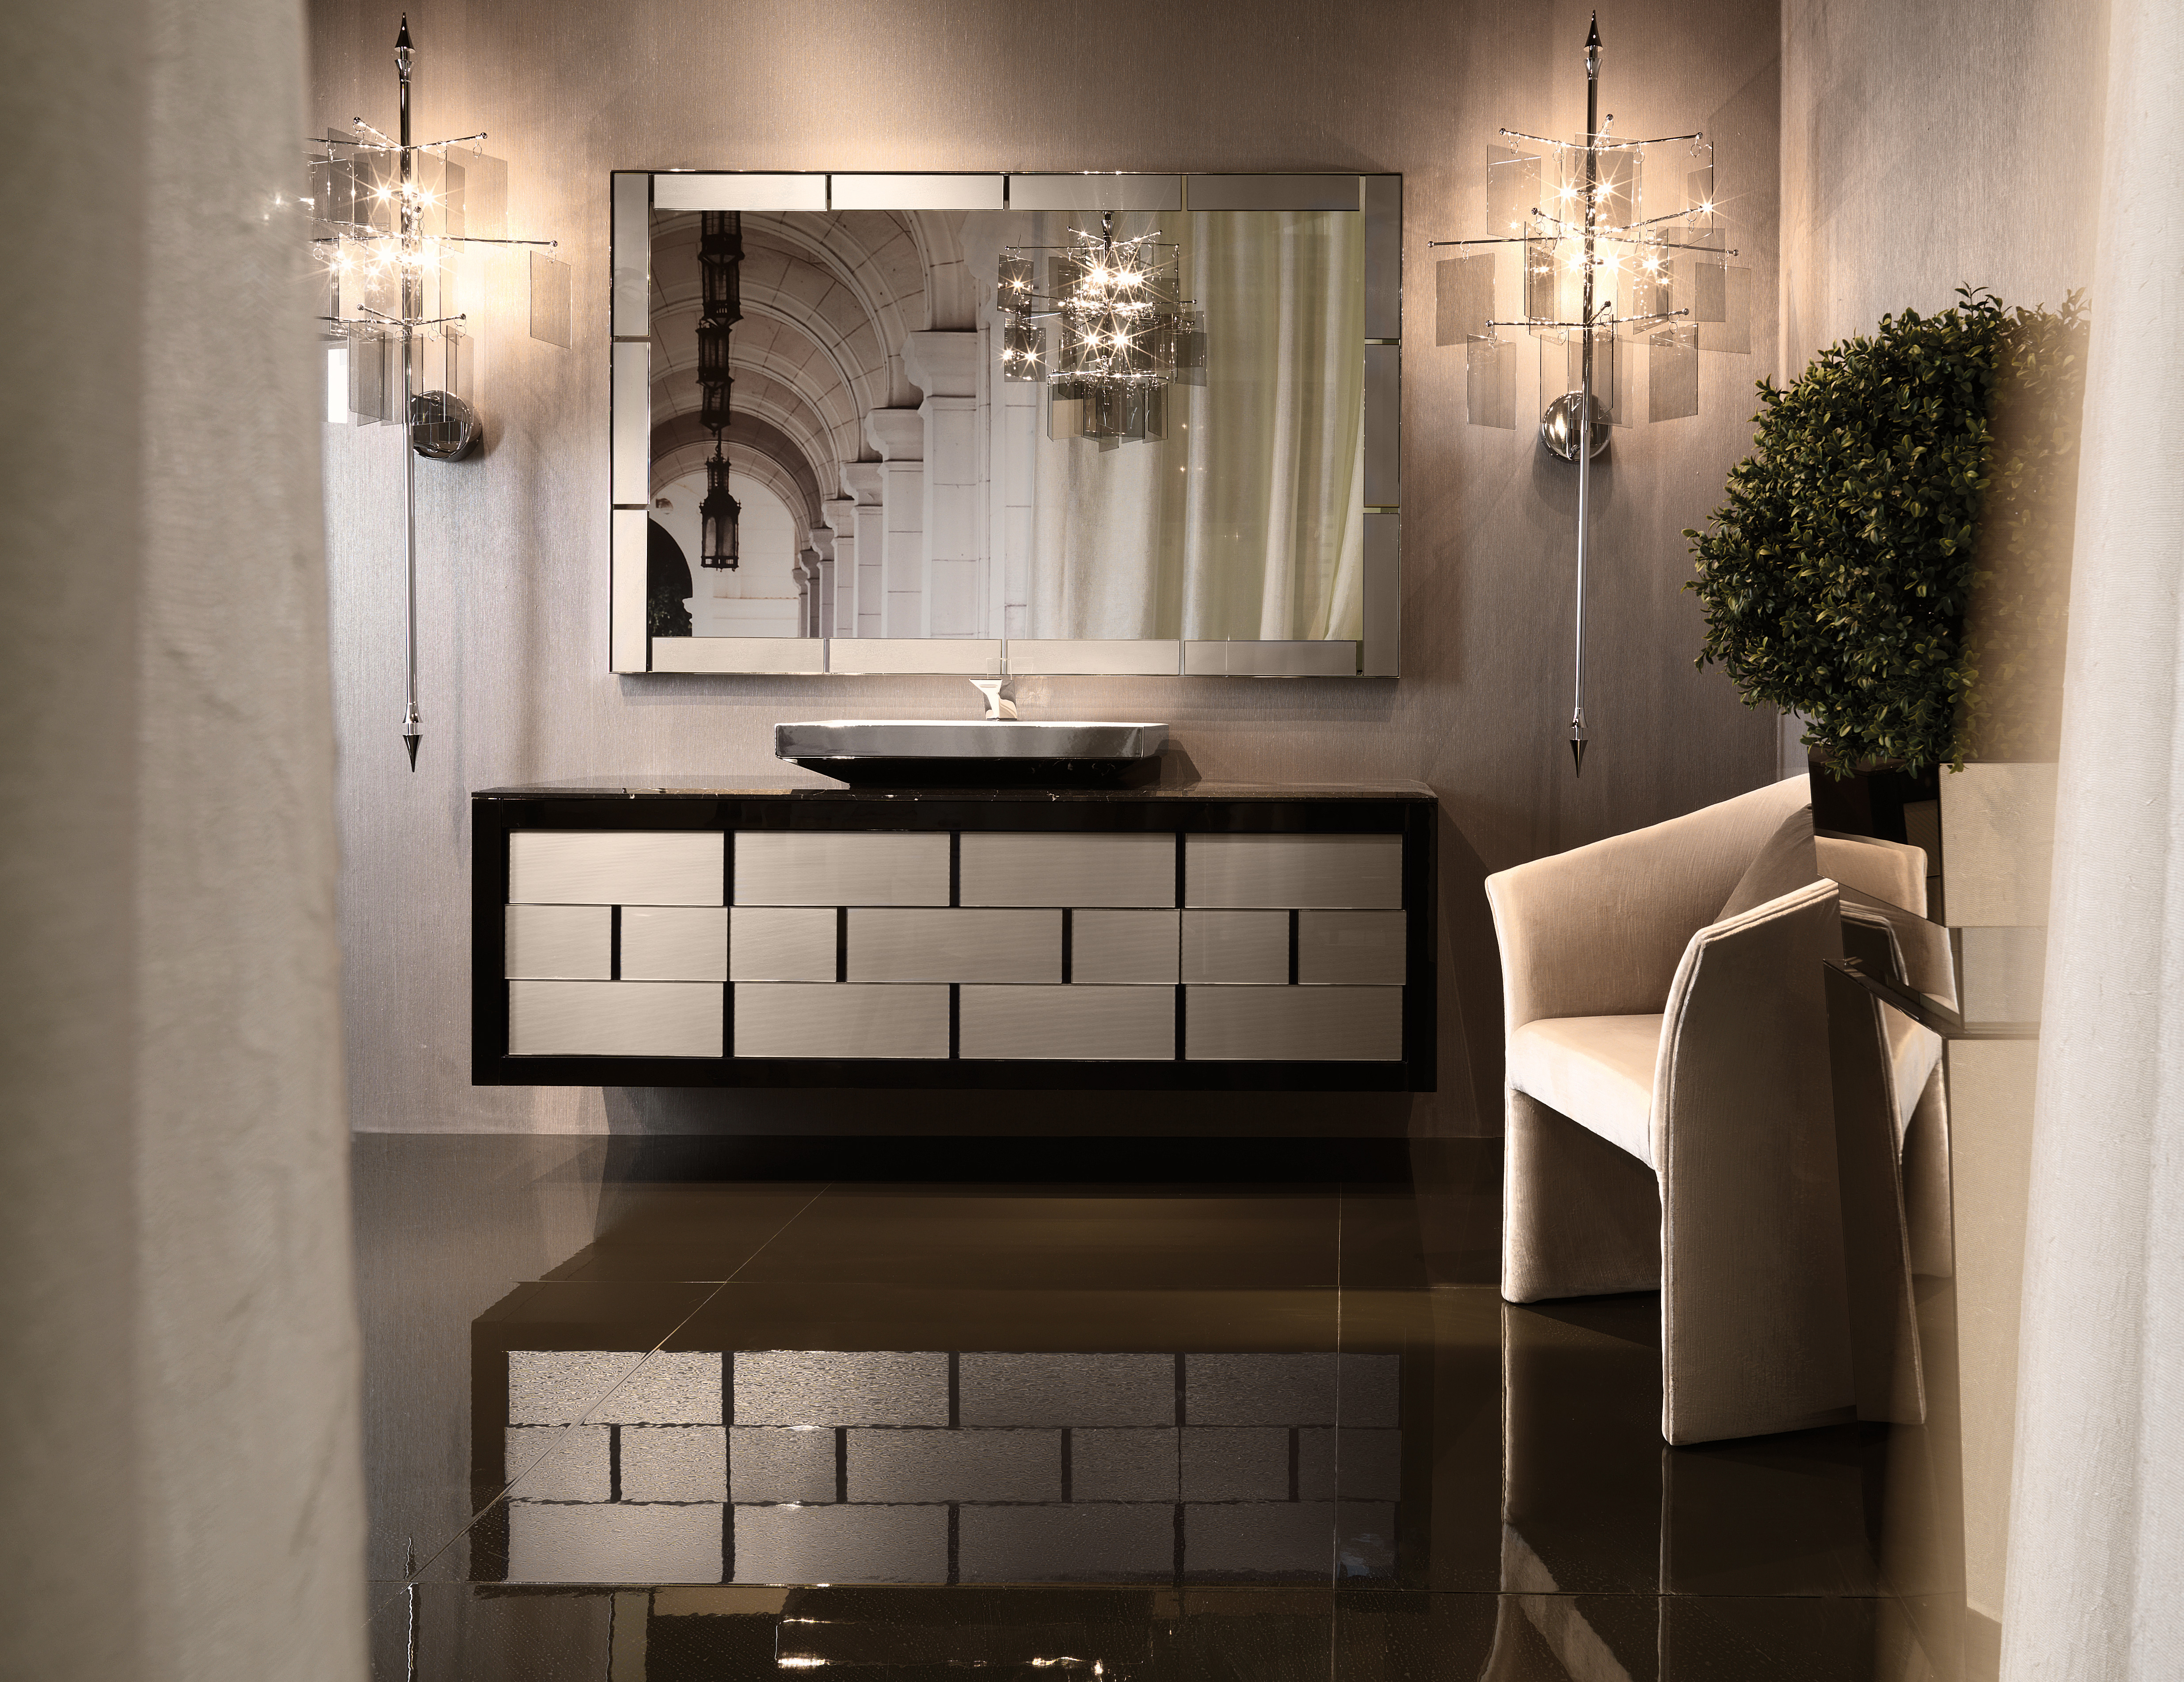 Ritz Luxury Italian Bathroom Vanity with regard to size 4942 X 3807